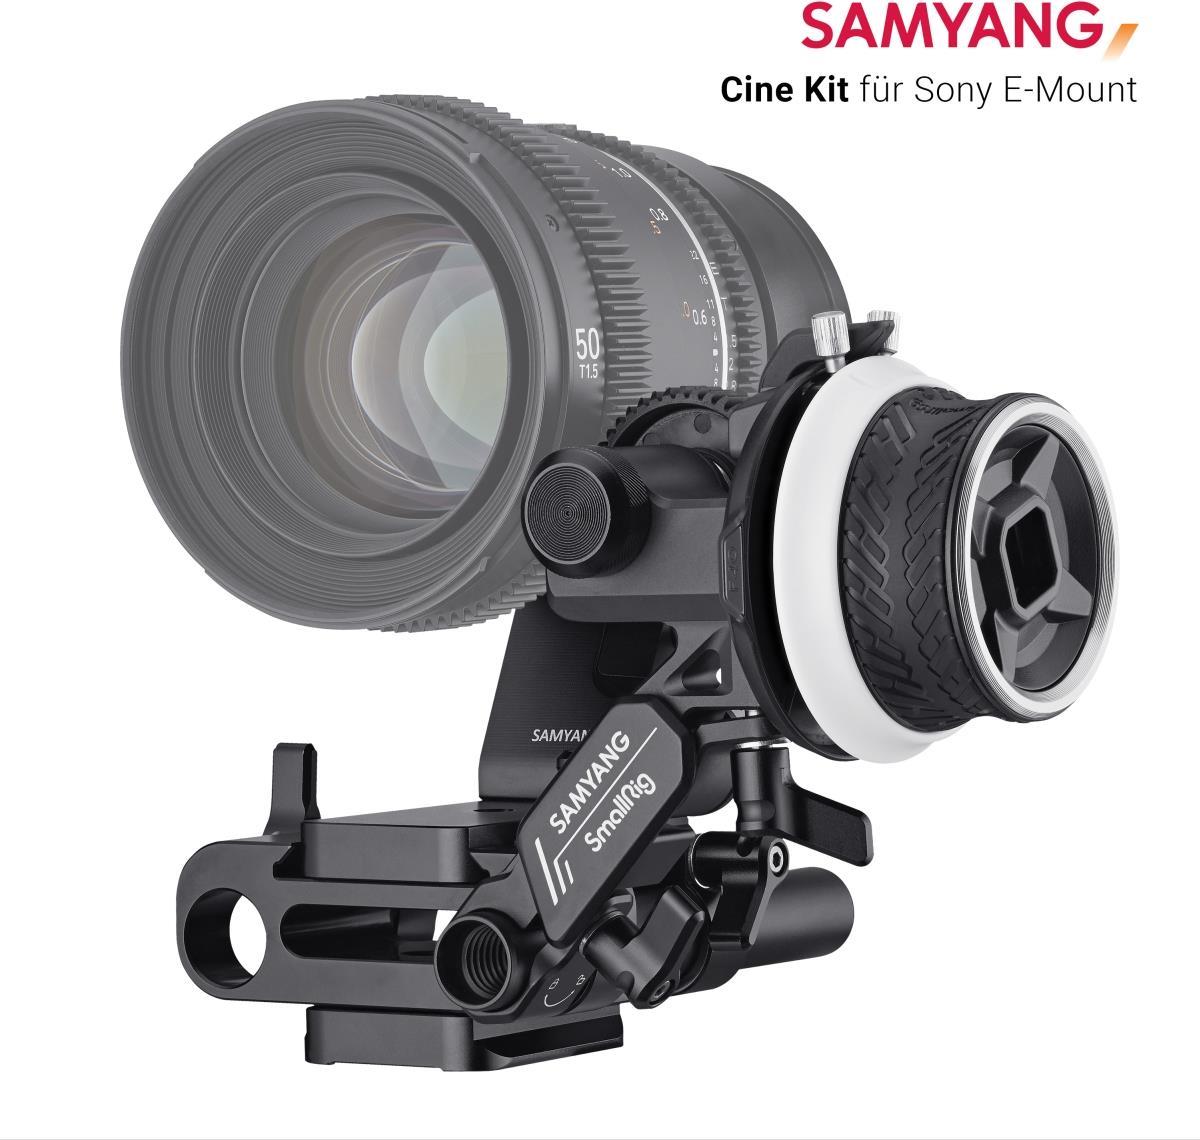 Samyang Cine Kit für Sony E-Mount (23274) von Samyang